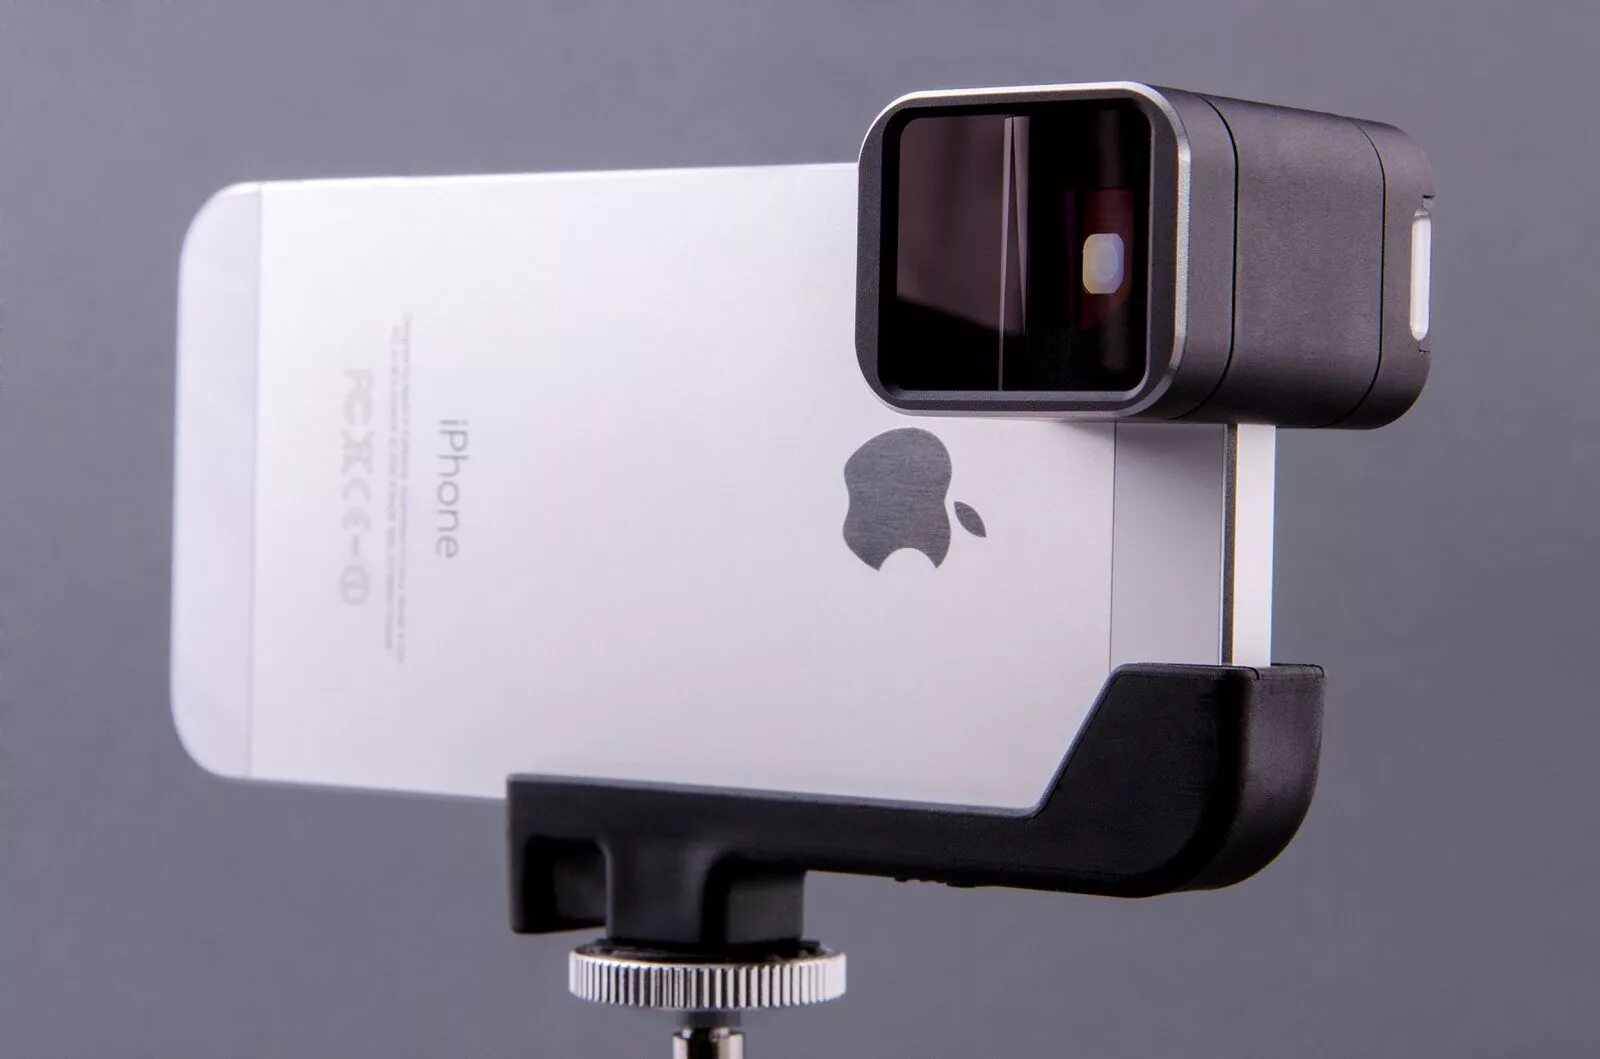 Анаморфный объектив для iphone. Sirius Anamorphic Lens Adapter iphone. Адаптер под объектив для iphone 11. Анаморфотный объектив для айфона.